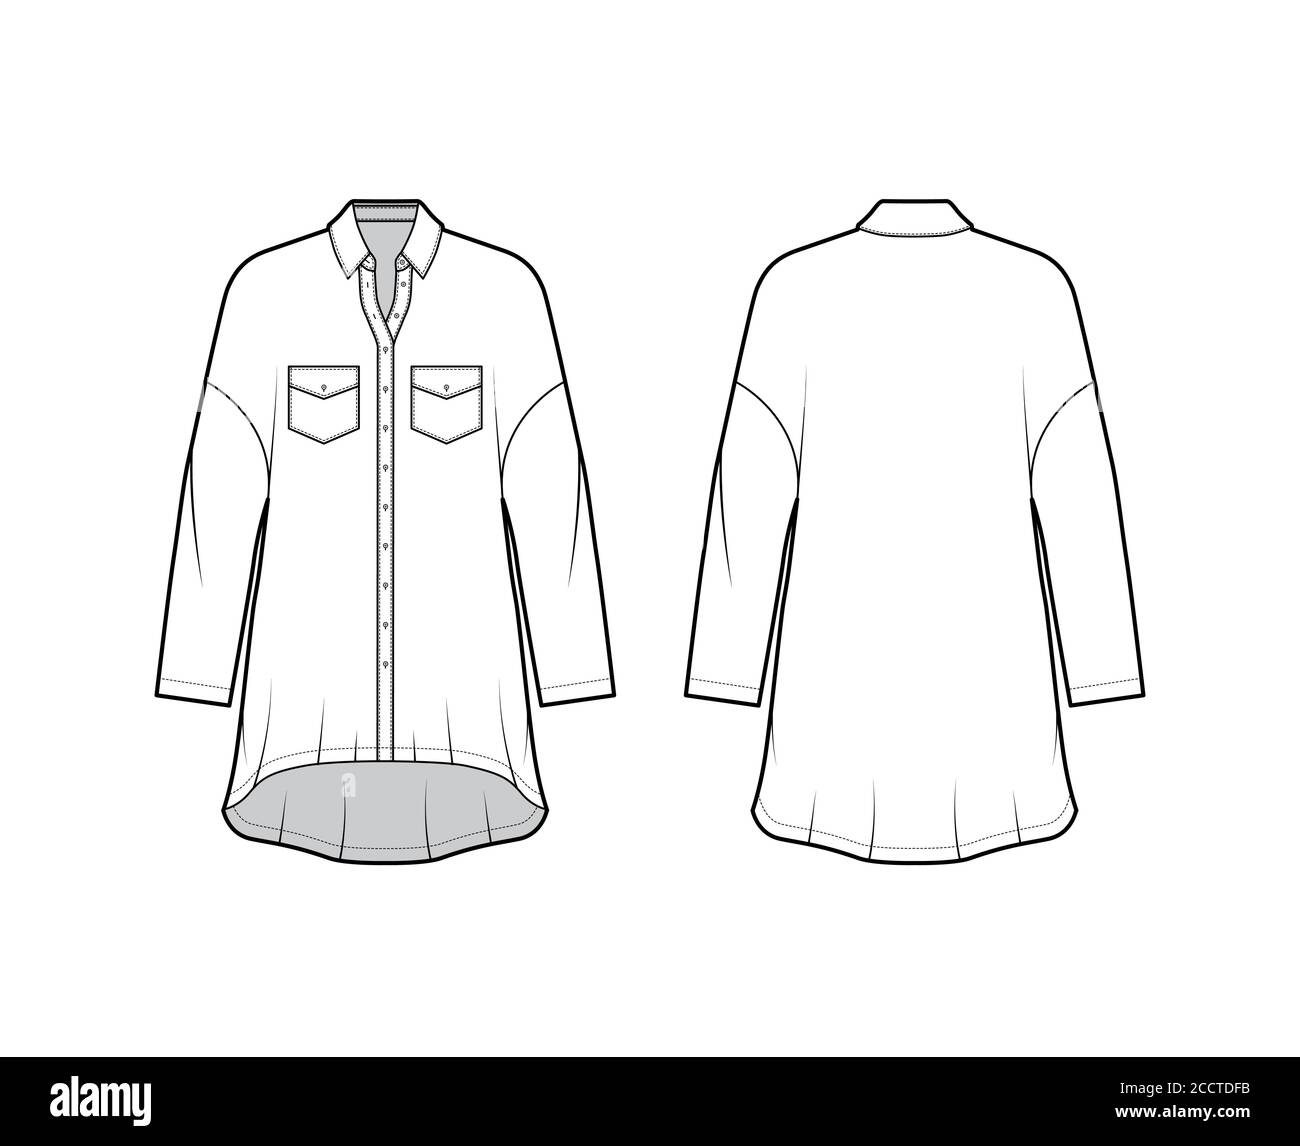 Oversized shirt dress technical fashion illustration with angled ...